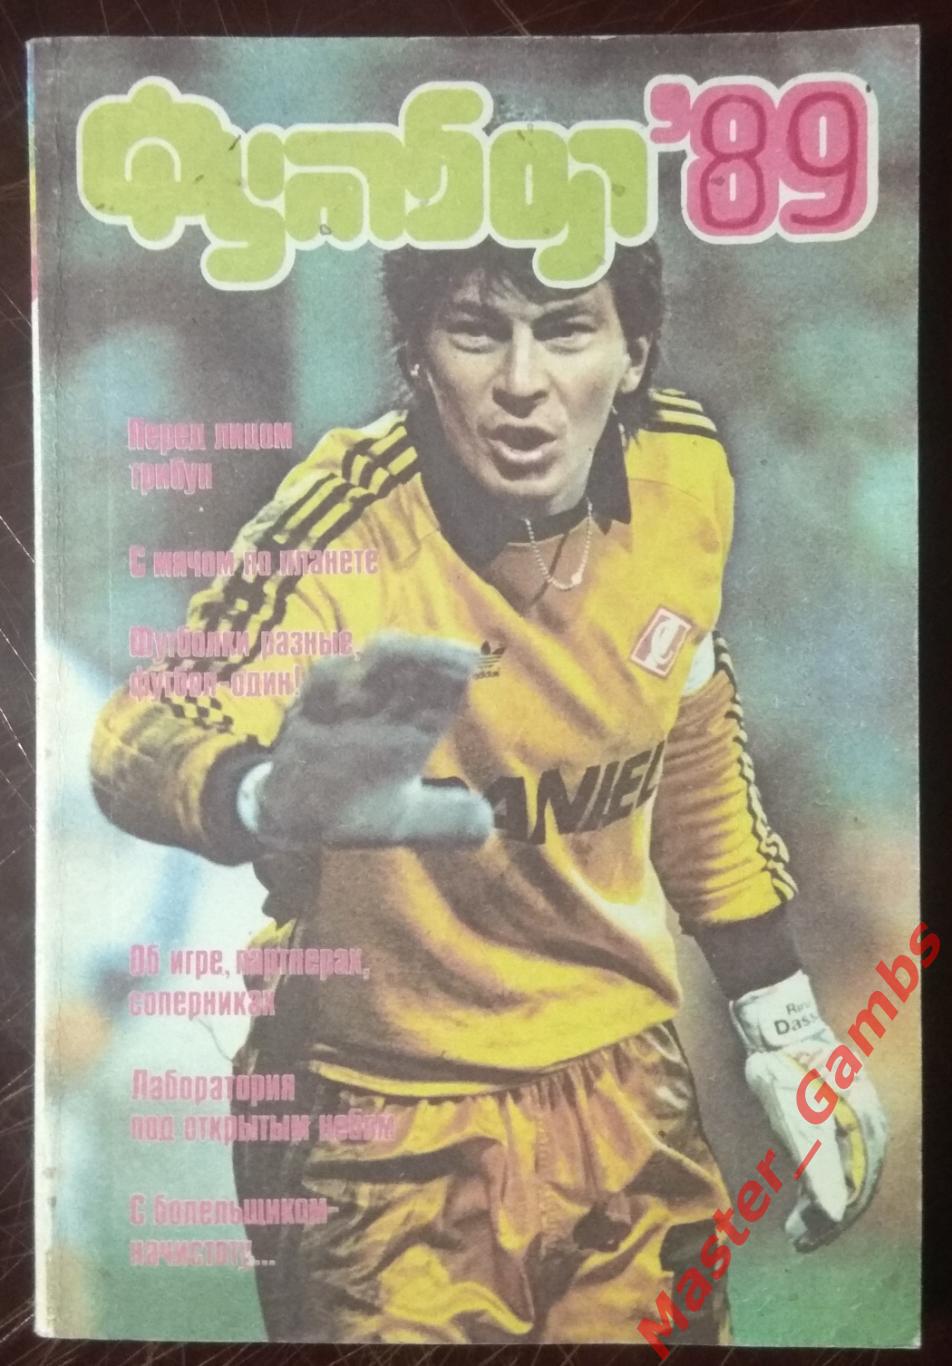 лебедев - футбол 89 (альманах) москва фис 1989